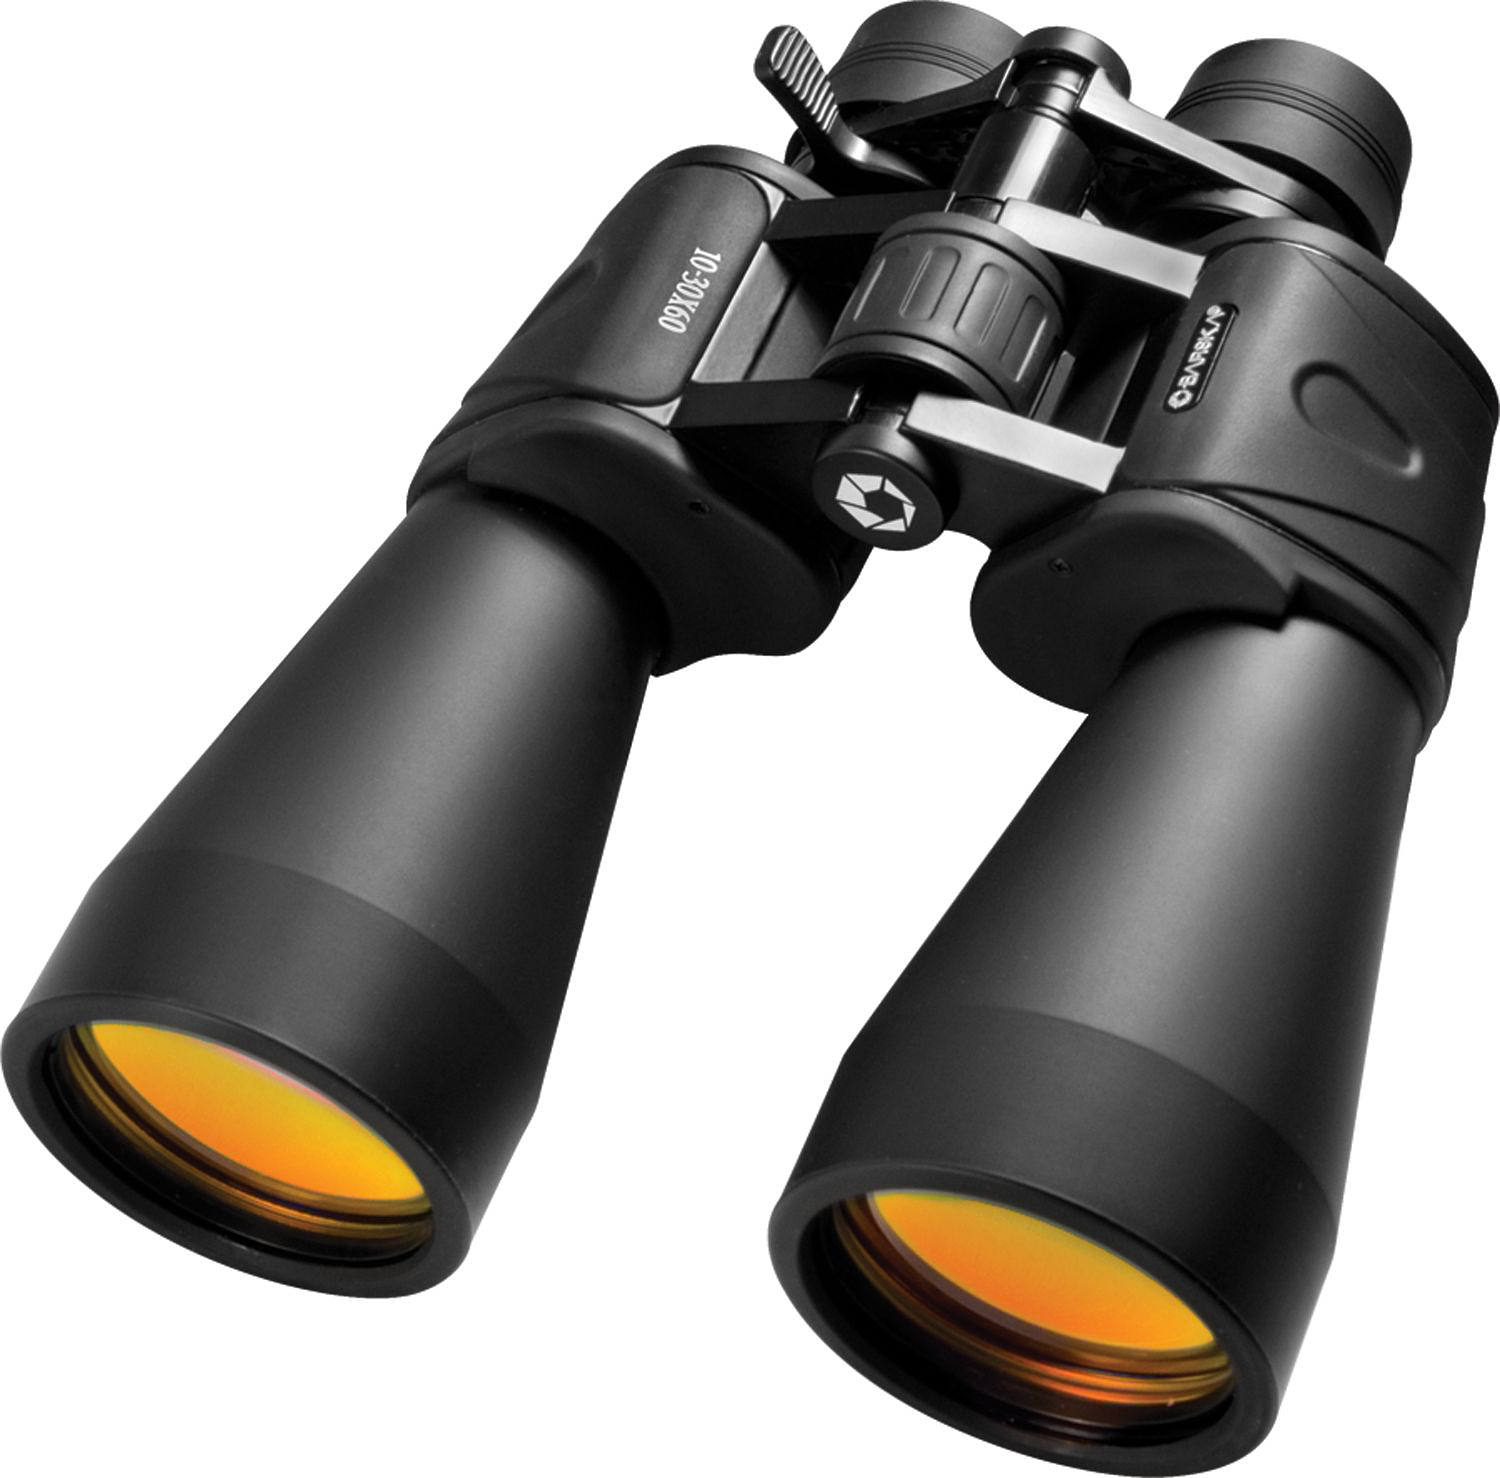 Barska Gladiator Zoom Binoculars - 10-30x60mm